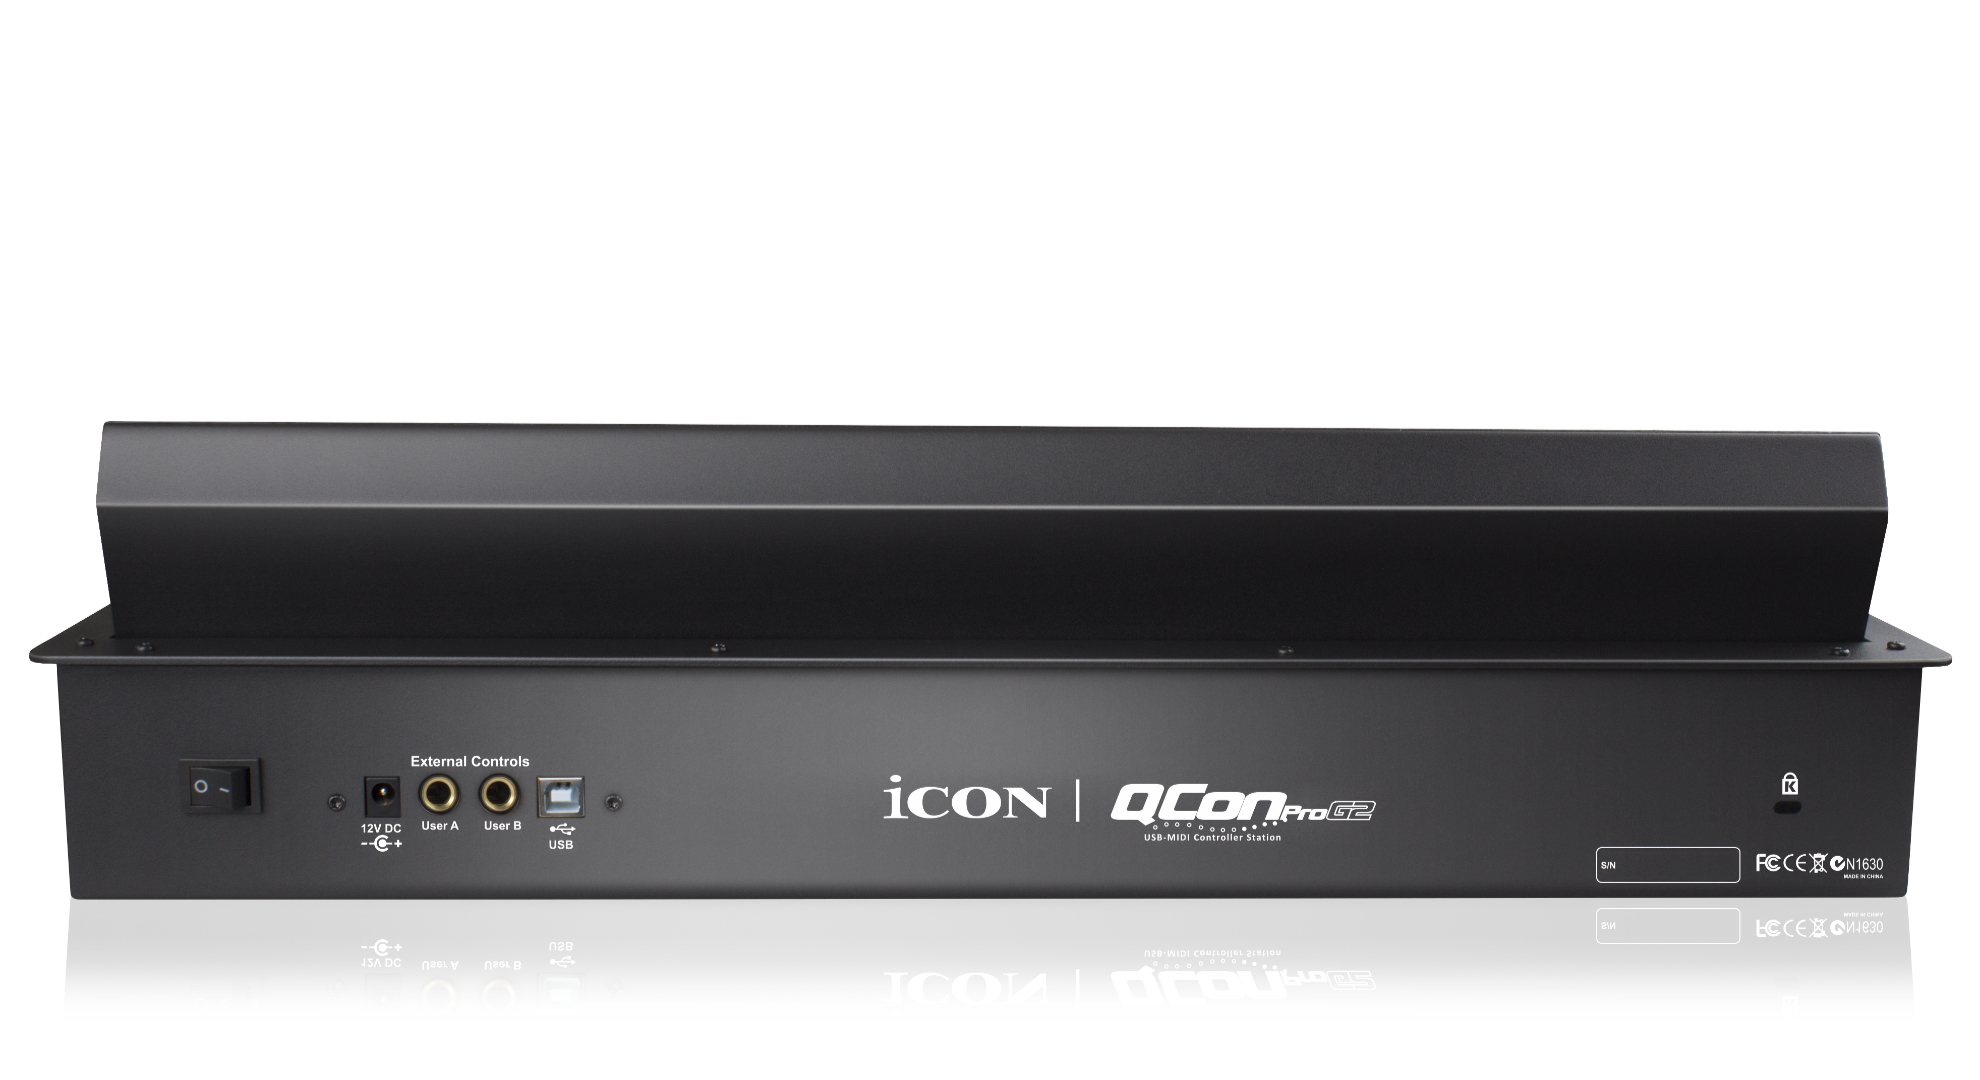 Icon QCon Pro G2